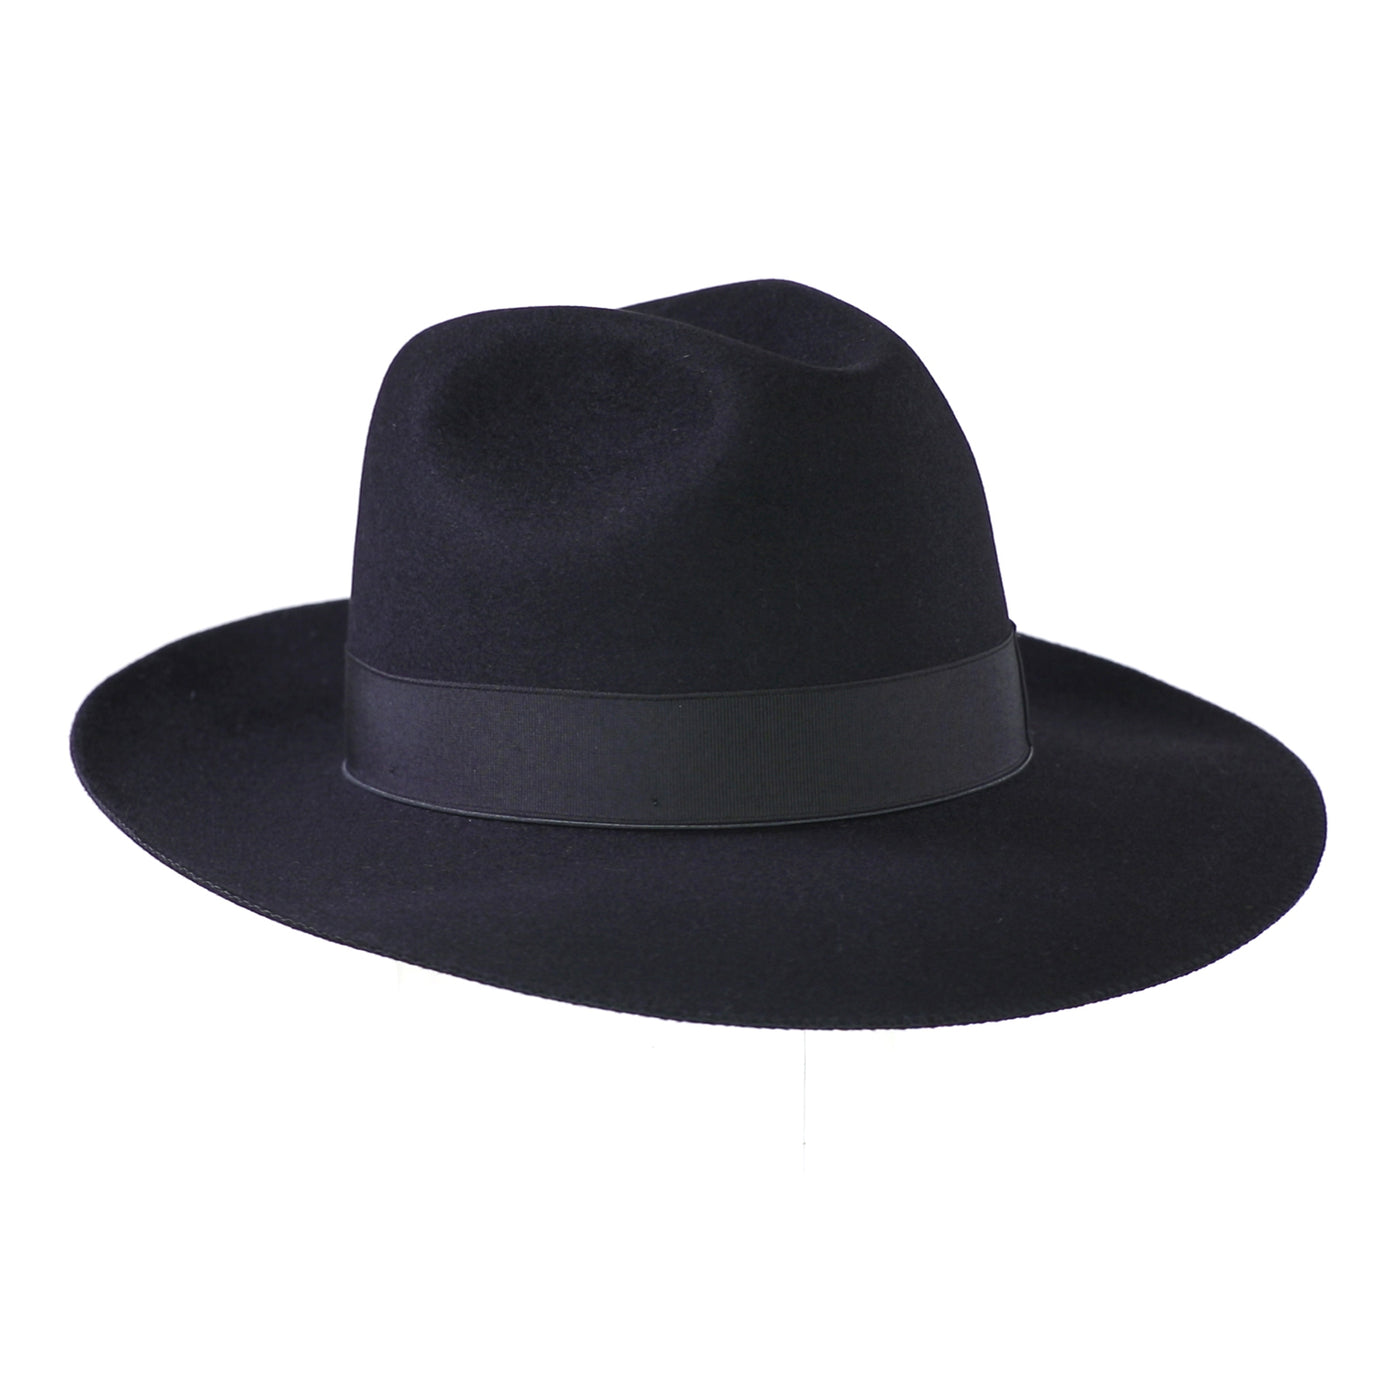 Mattia 318, product_type] - Borsalino for Atica fedora hat